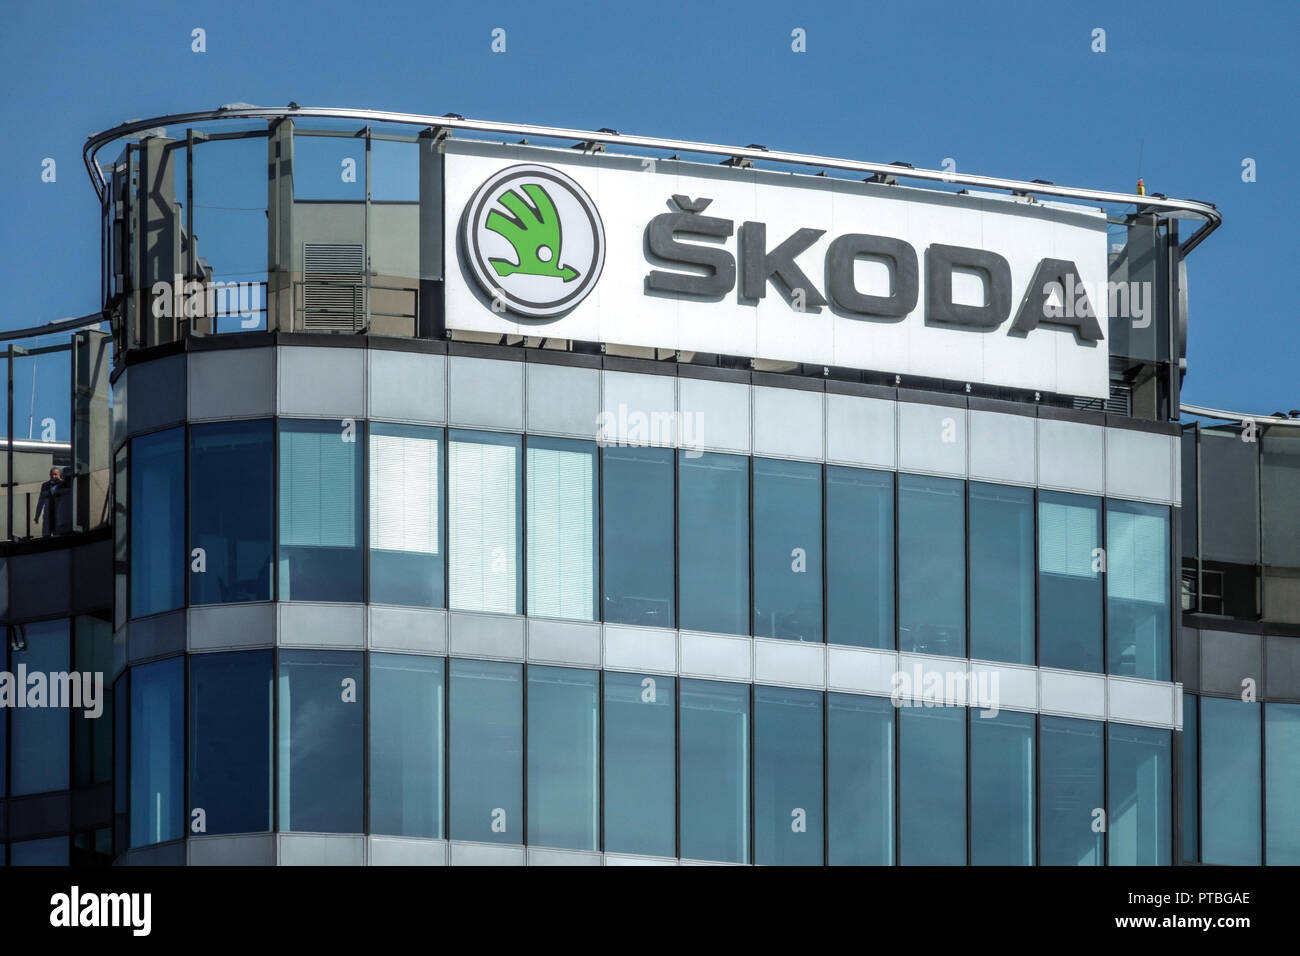 Skoda logo, Czech Republic Stock Photo